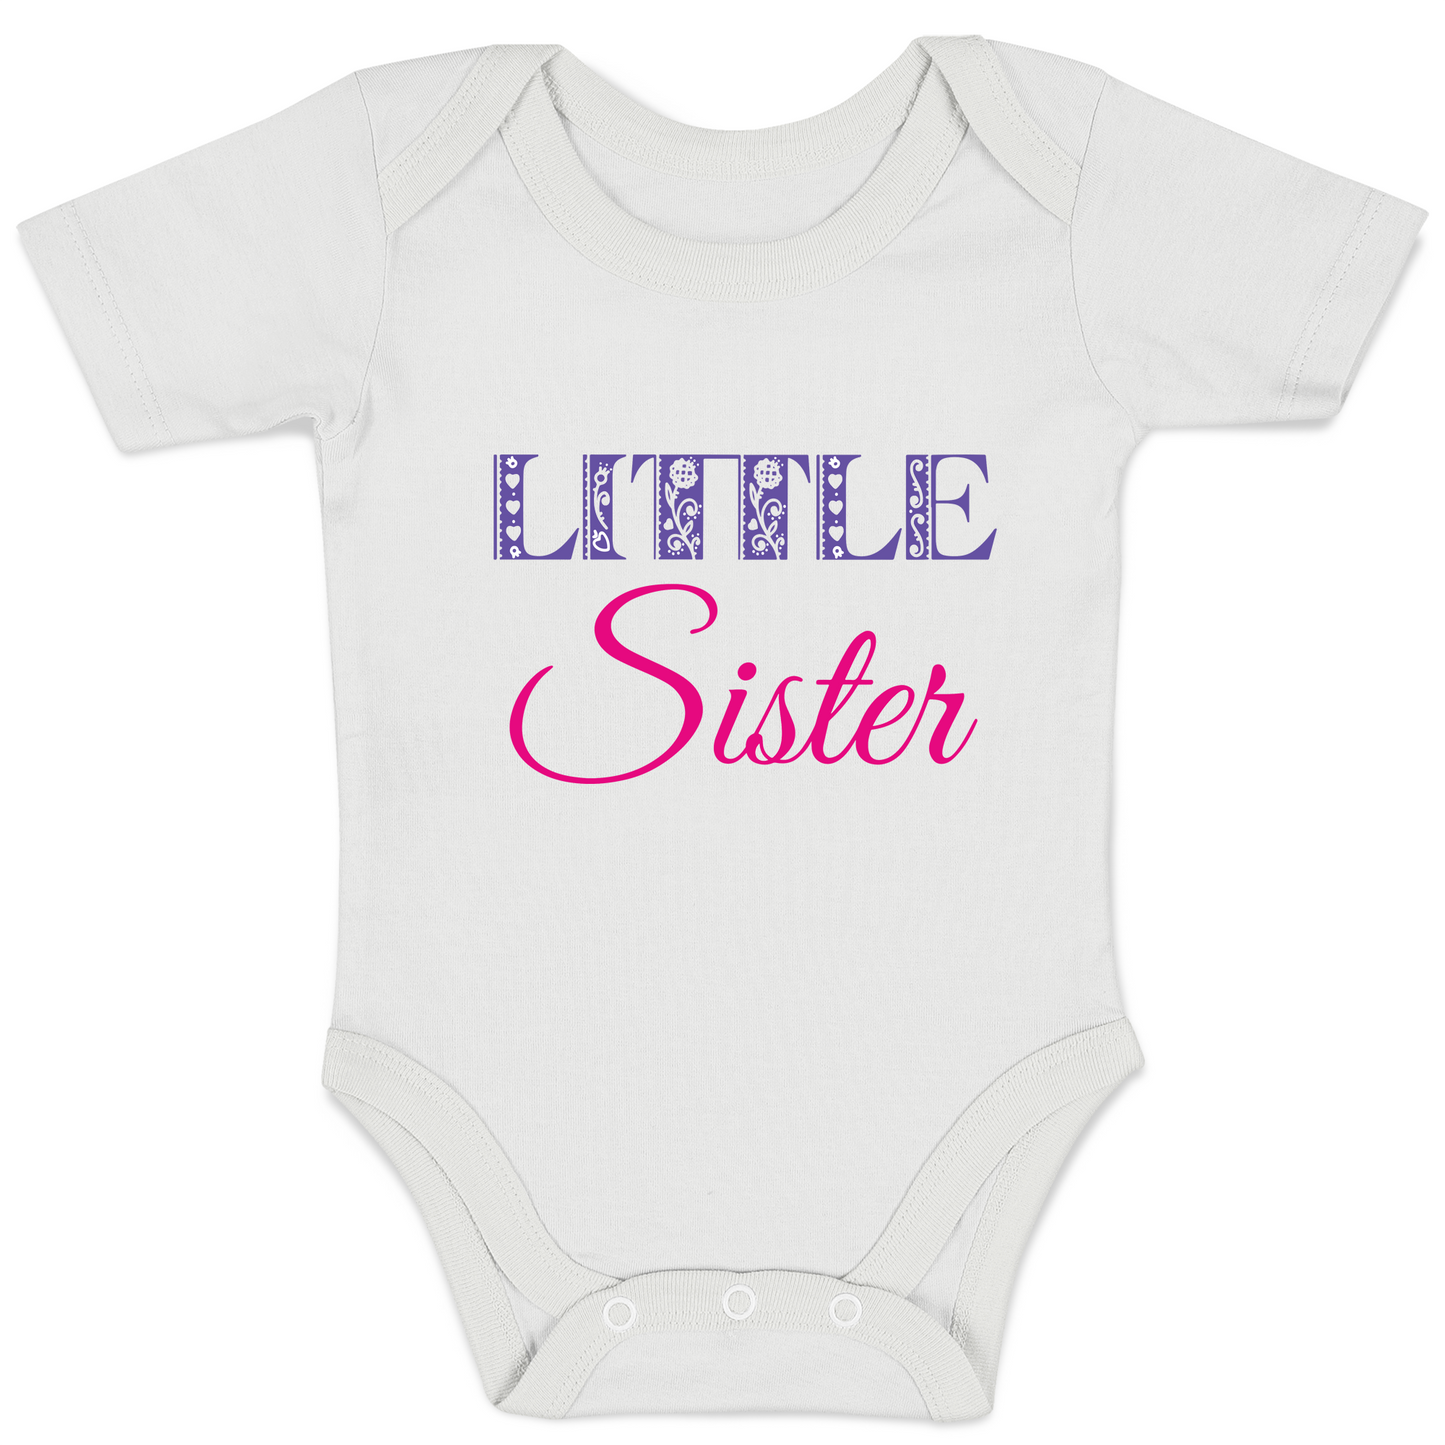 Endanzoo Matching Sisters Organic Kids Tee Shirt - Big Sister & Little Sister